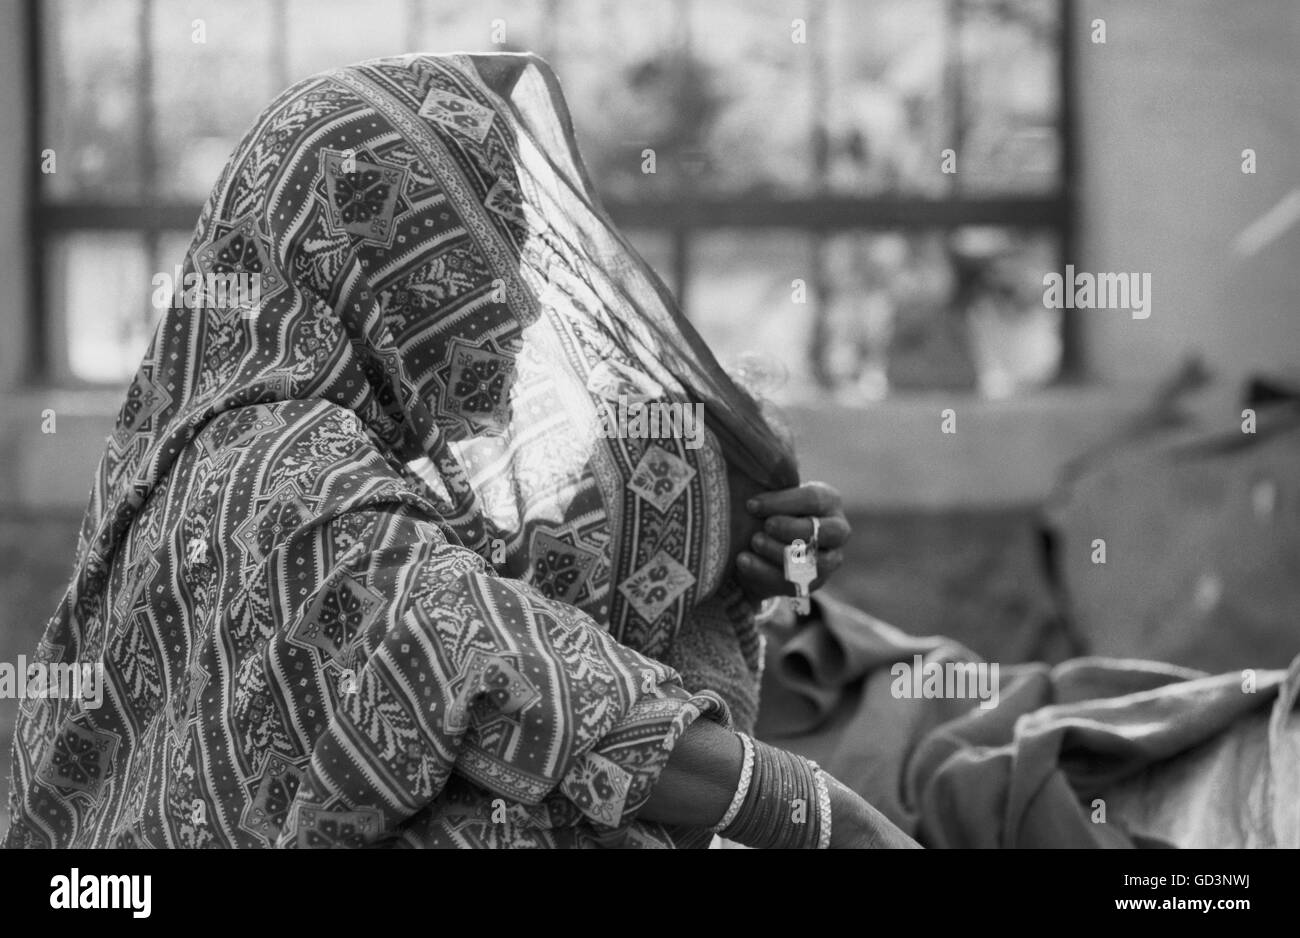 A woman in purdah Stock Photo